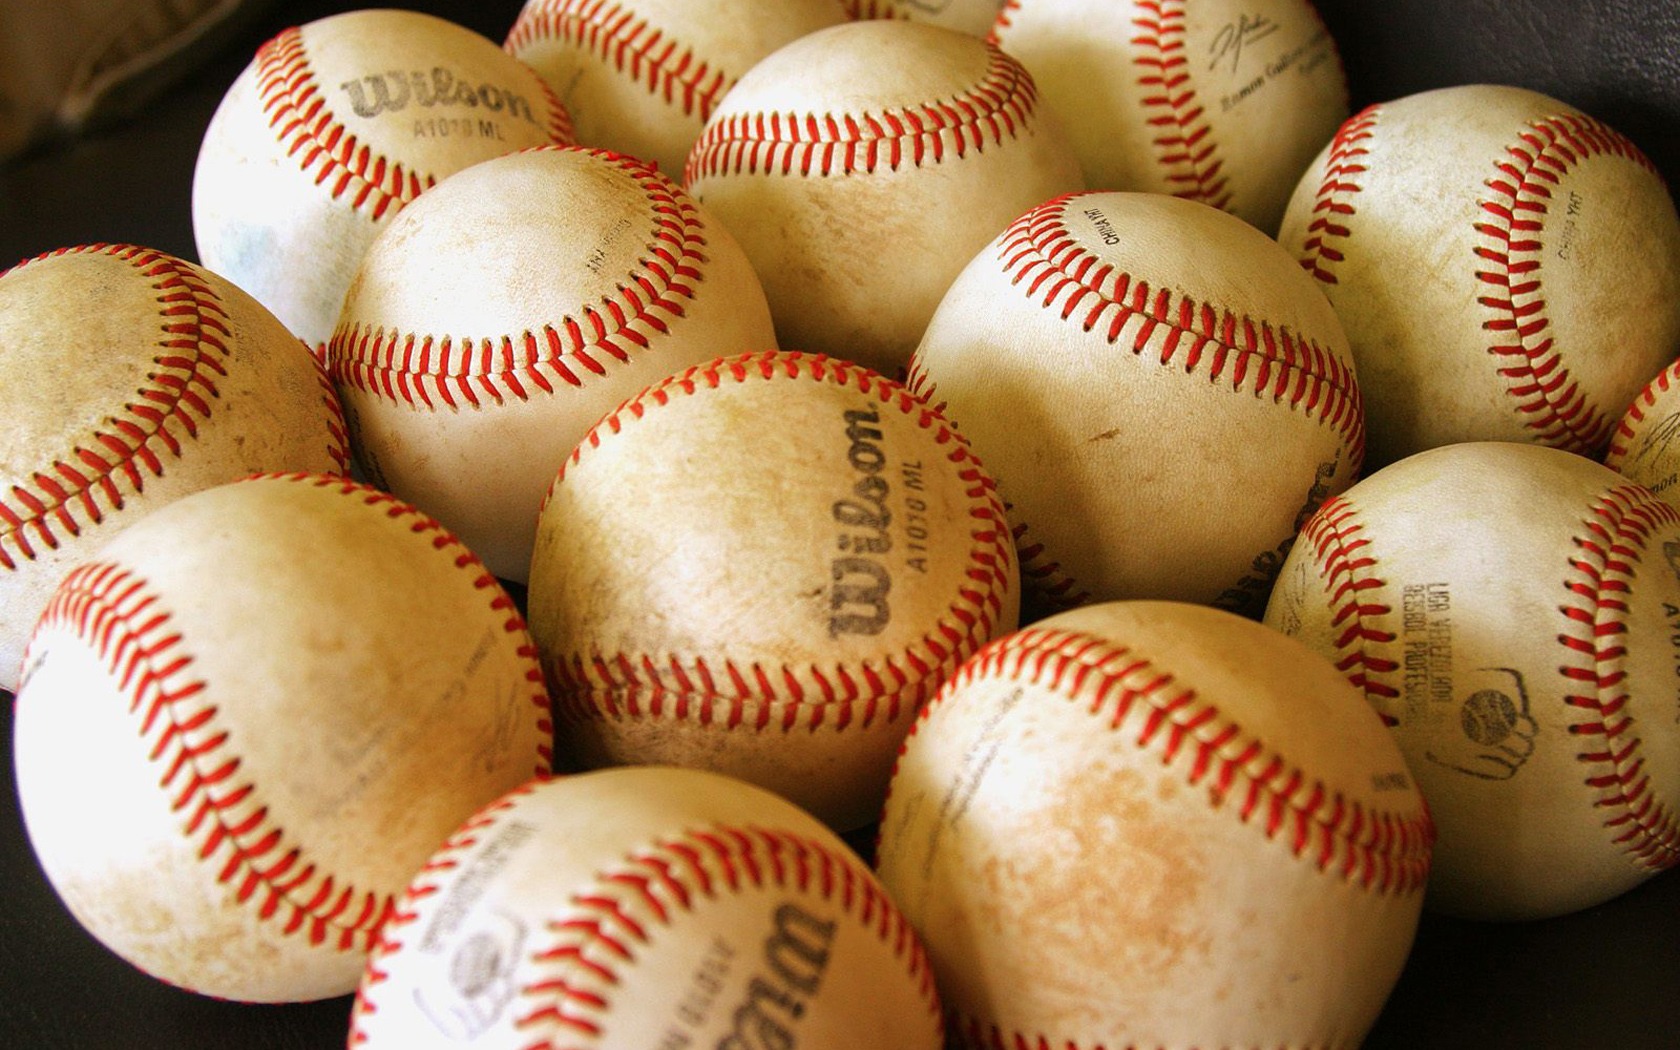 Baseball Background